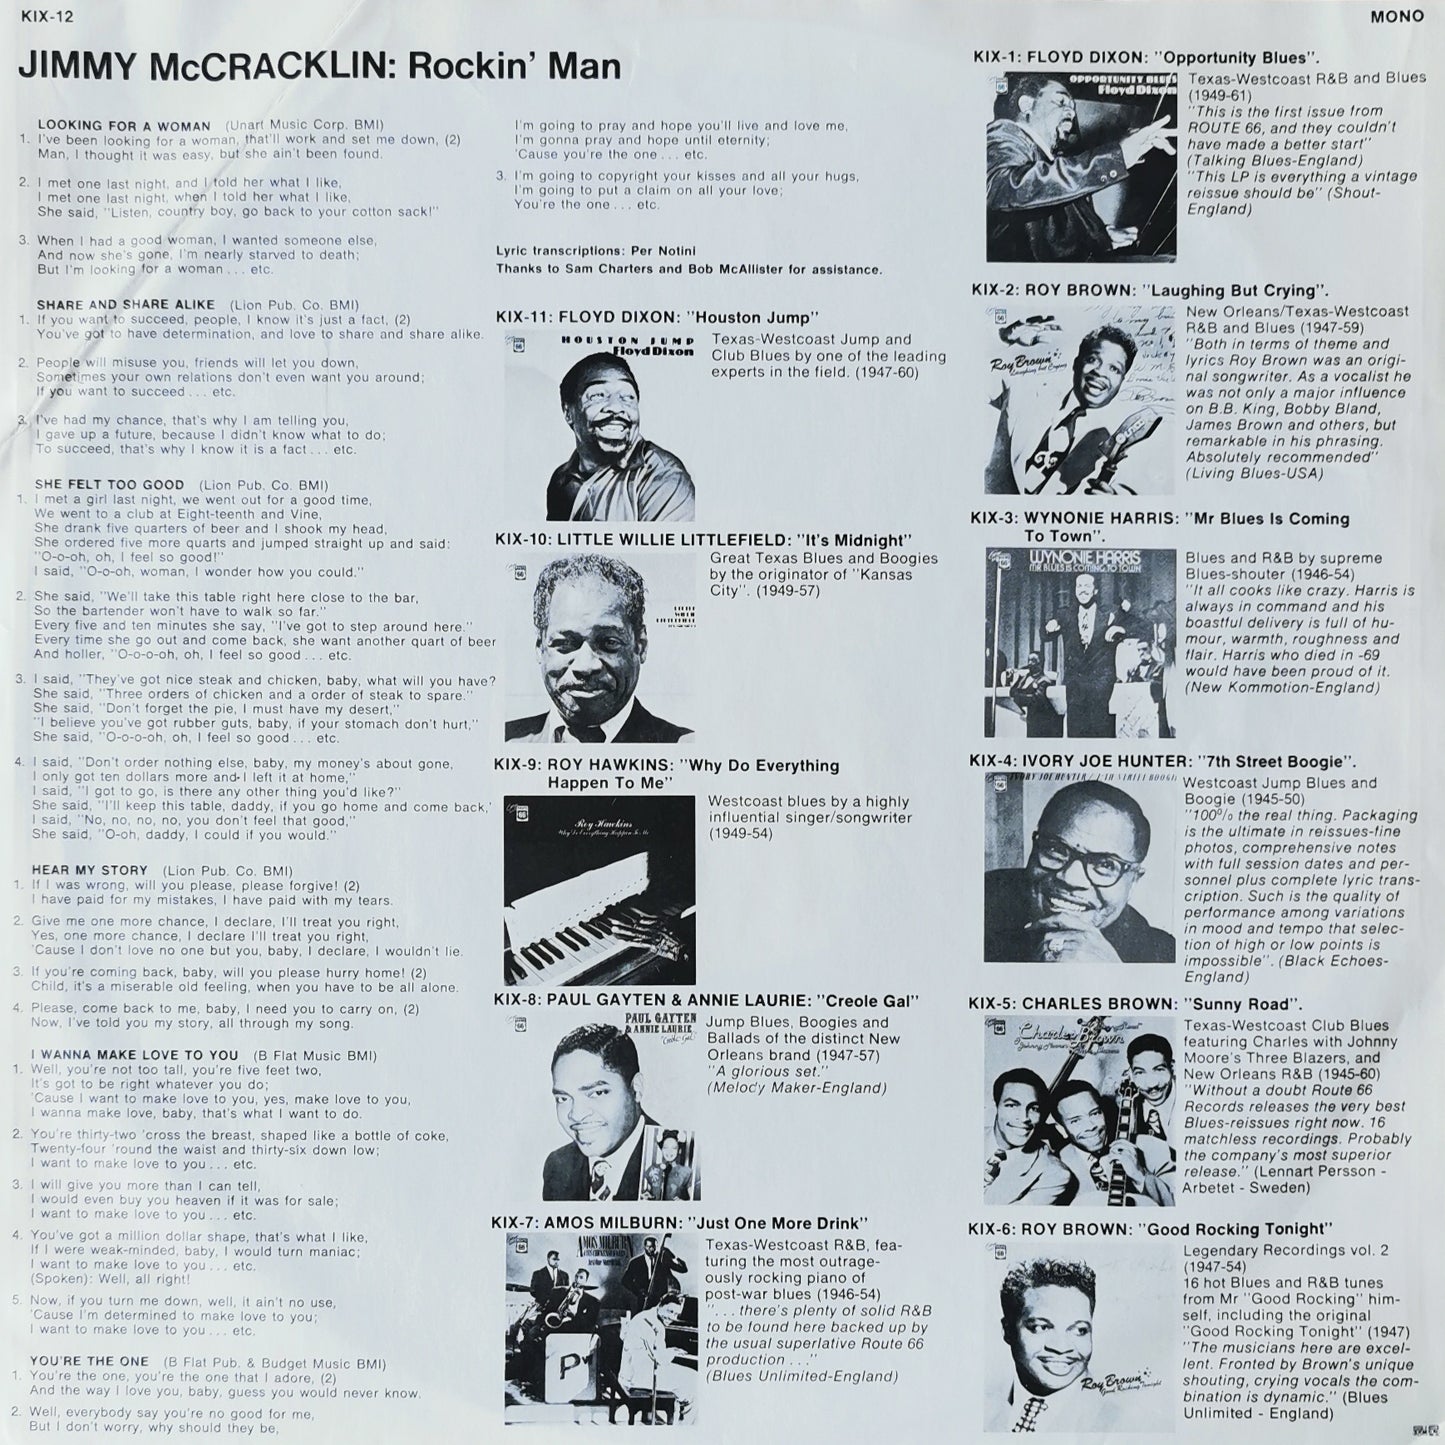 JIMMY MCCRAKLIN AND HIS BLUES BLASTERS - Rockin' Man